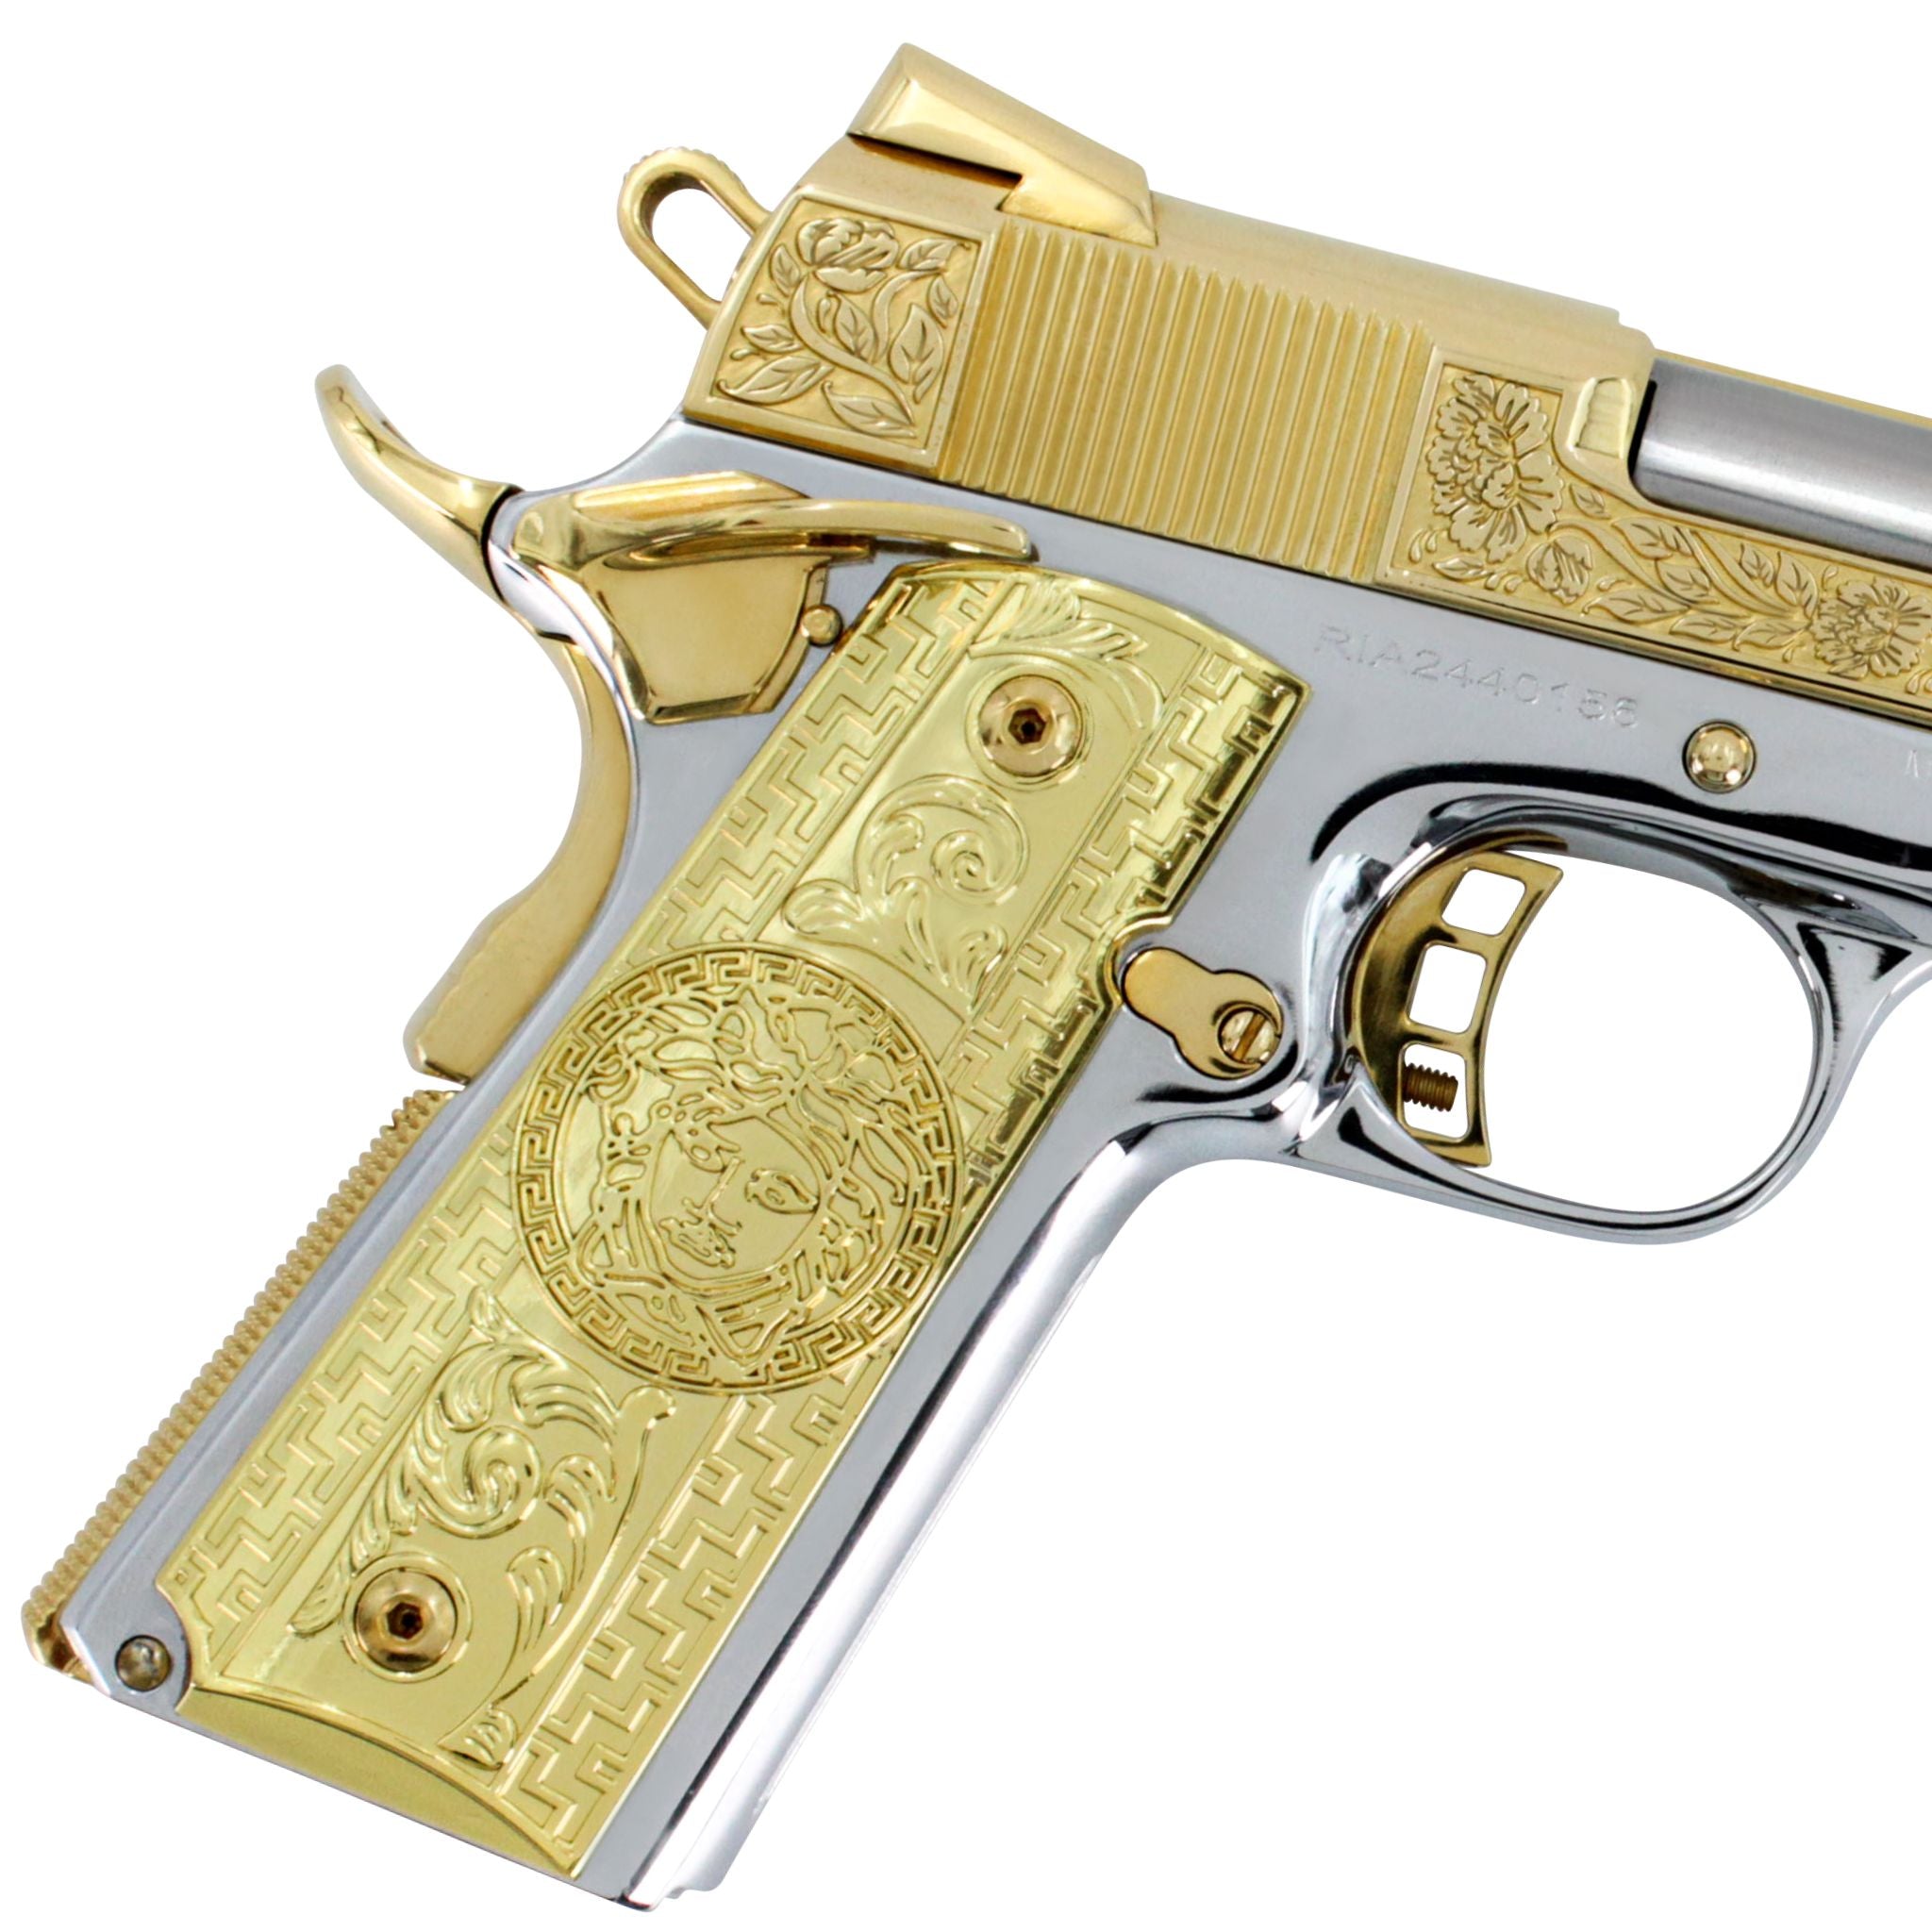 Rock Island 1911, 45 ACP, Italian Renaissance, 24K Gold Plated Slide & Accents with High Polished White Chrome Frame, SKU: 6595861872742, 24 karat gold gun, 24 Karat Gold Firearm, California compliant handguns